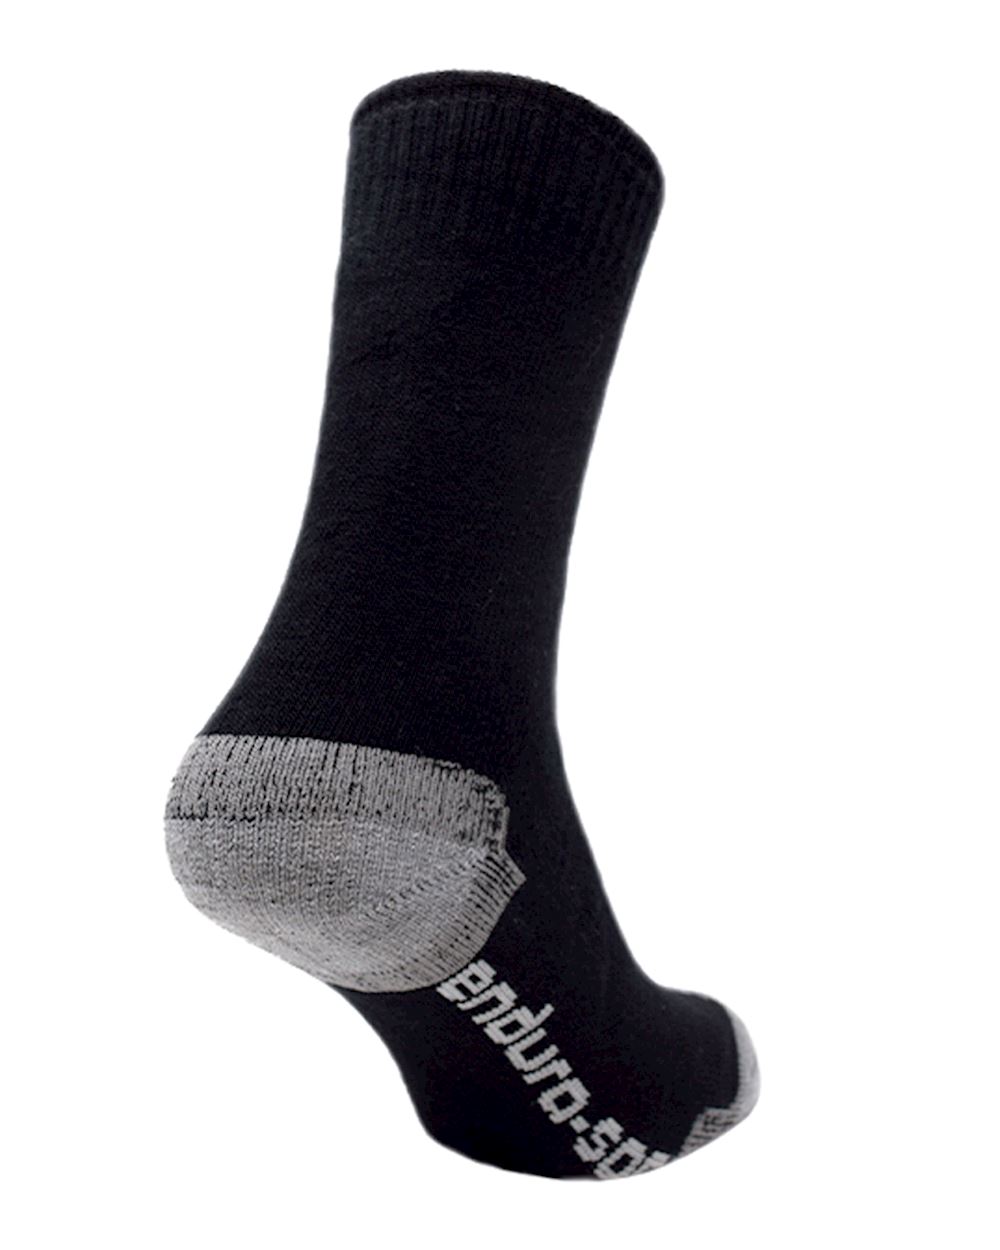 Endura Hard Wearing Insulated Boot Sock | From Aspli Safety